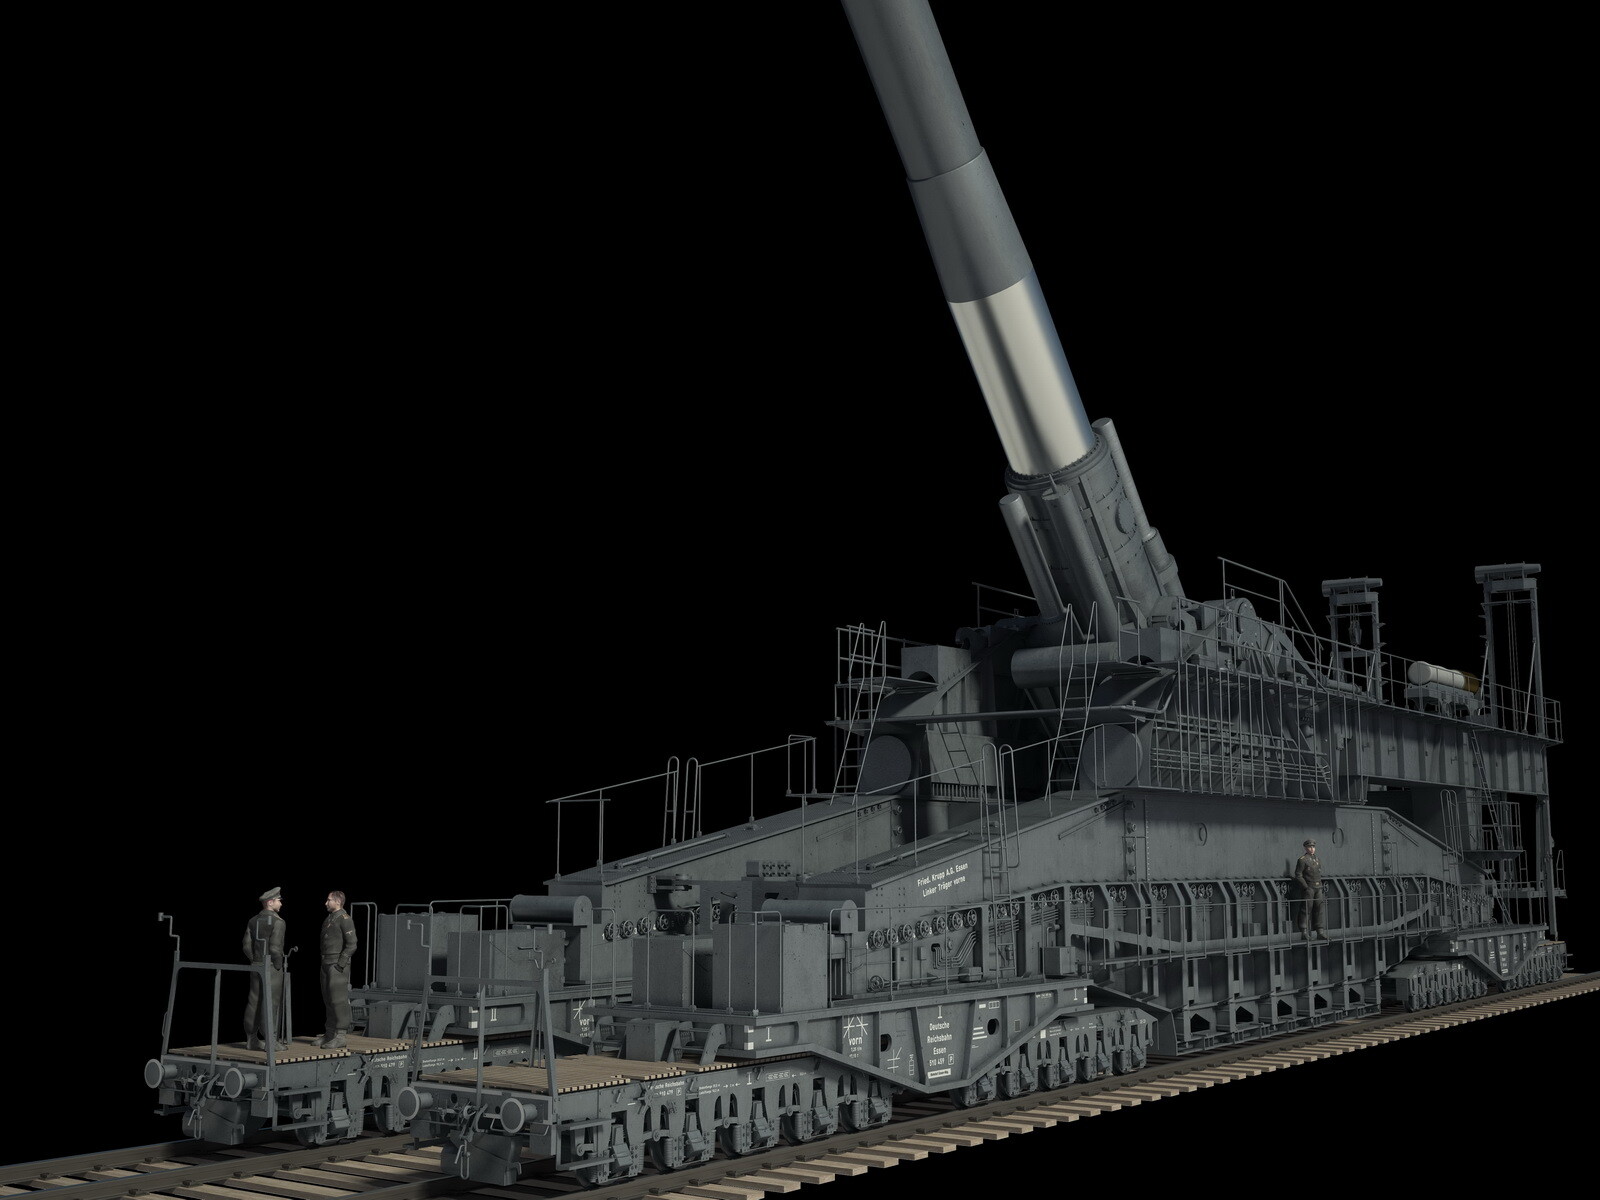 Schwerer Gustav railway artillery 80cm 1/200 (53NNTKU2J) by